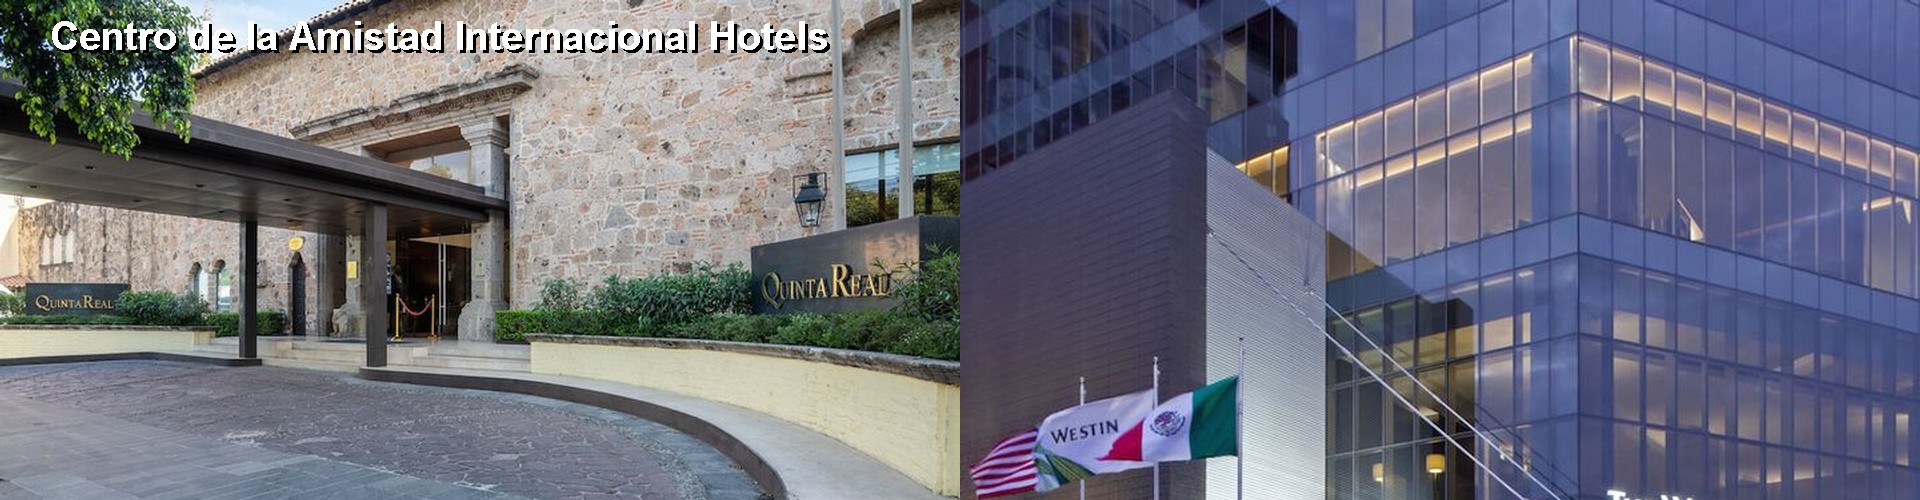 5 Best Hotels near Centro de la Amistad Internacional